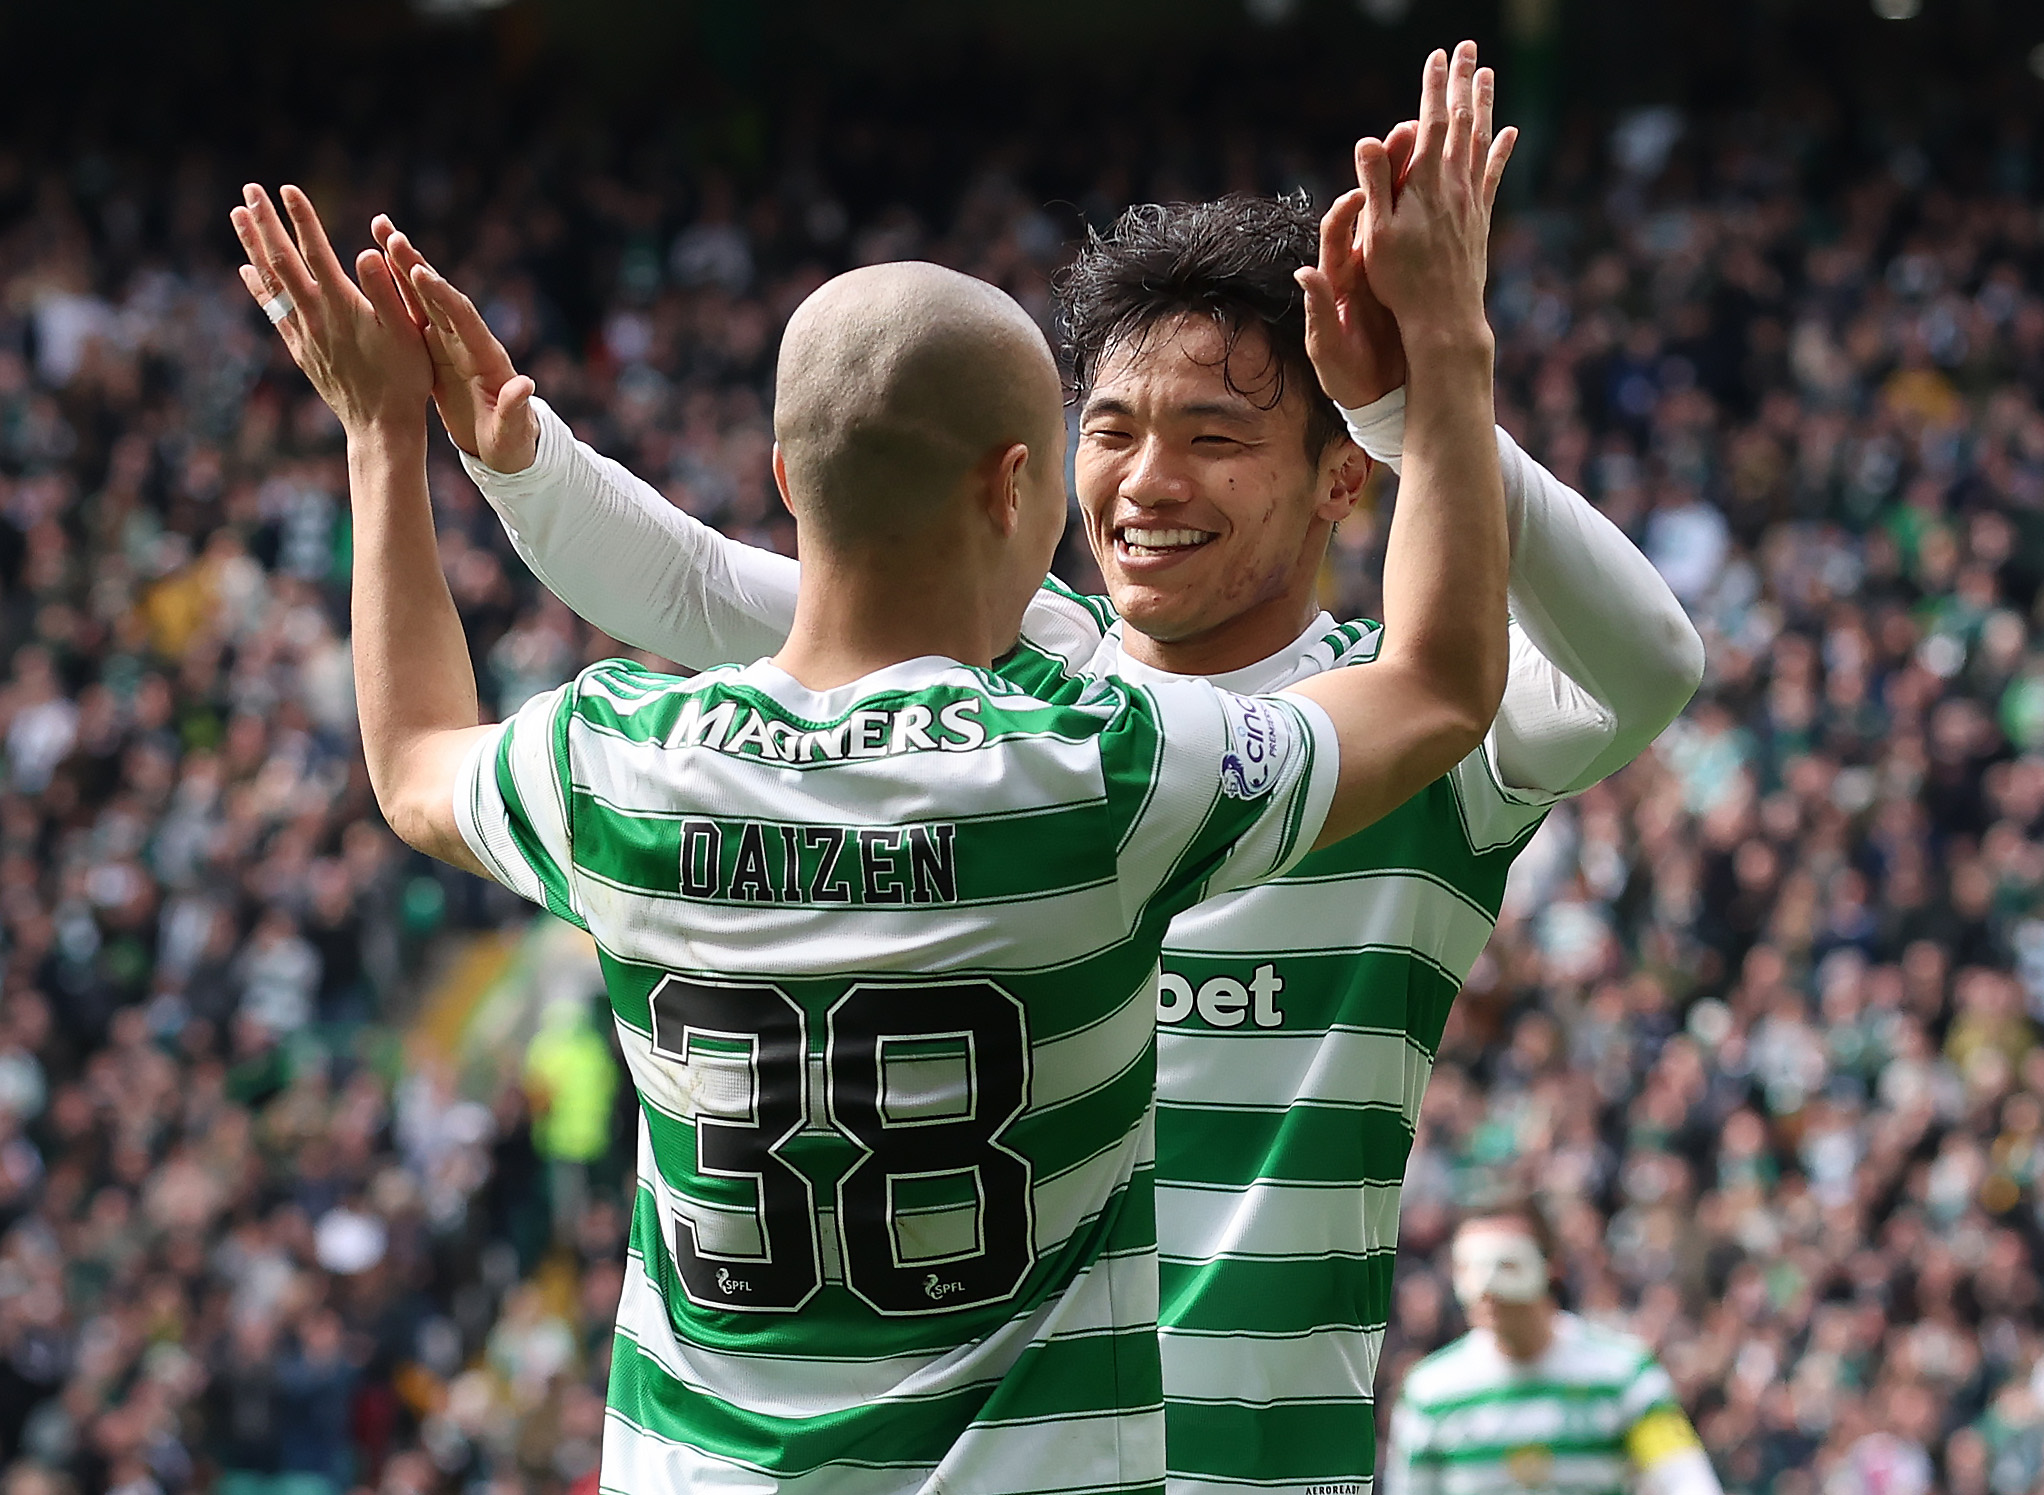 Celtic players celebrate a goal